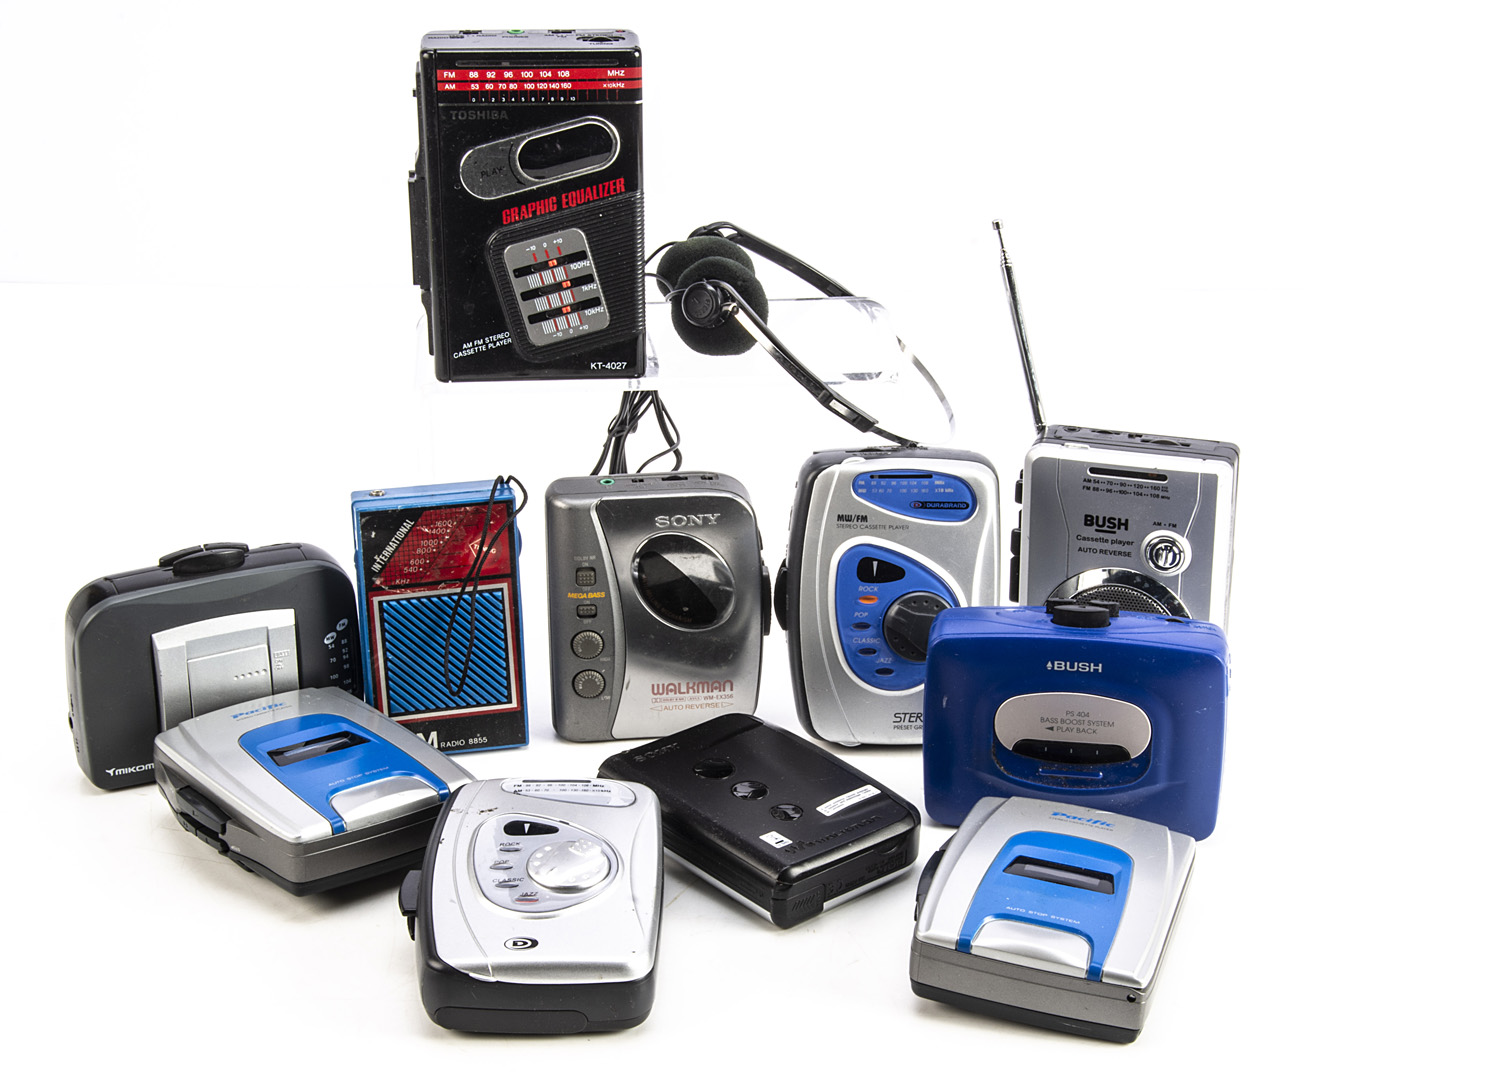 Portable Cassette Players, ten portable Cassette players, Sony Walkman WM-EX356 & WM-FX290,